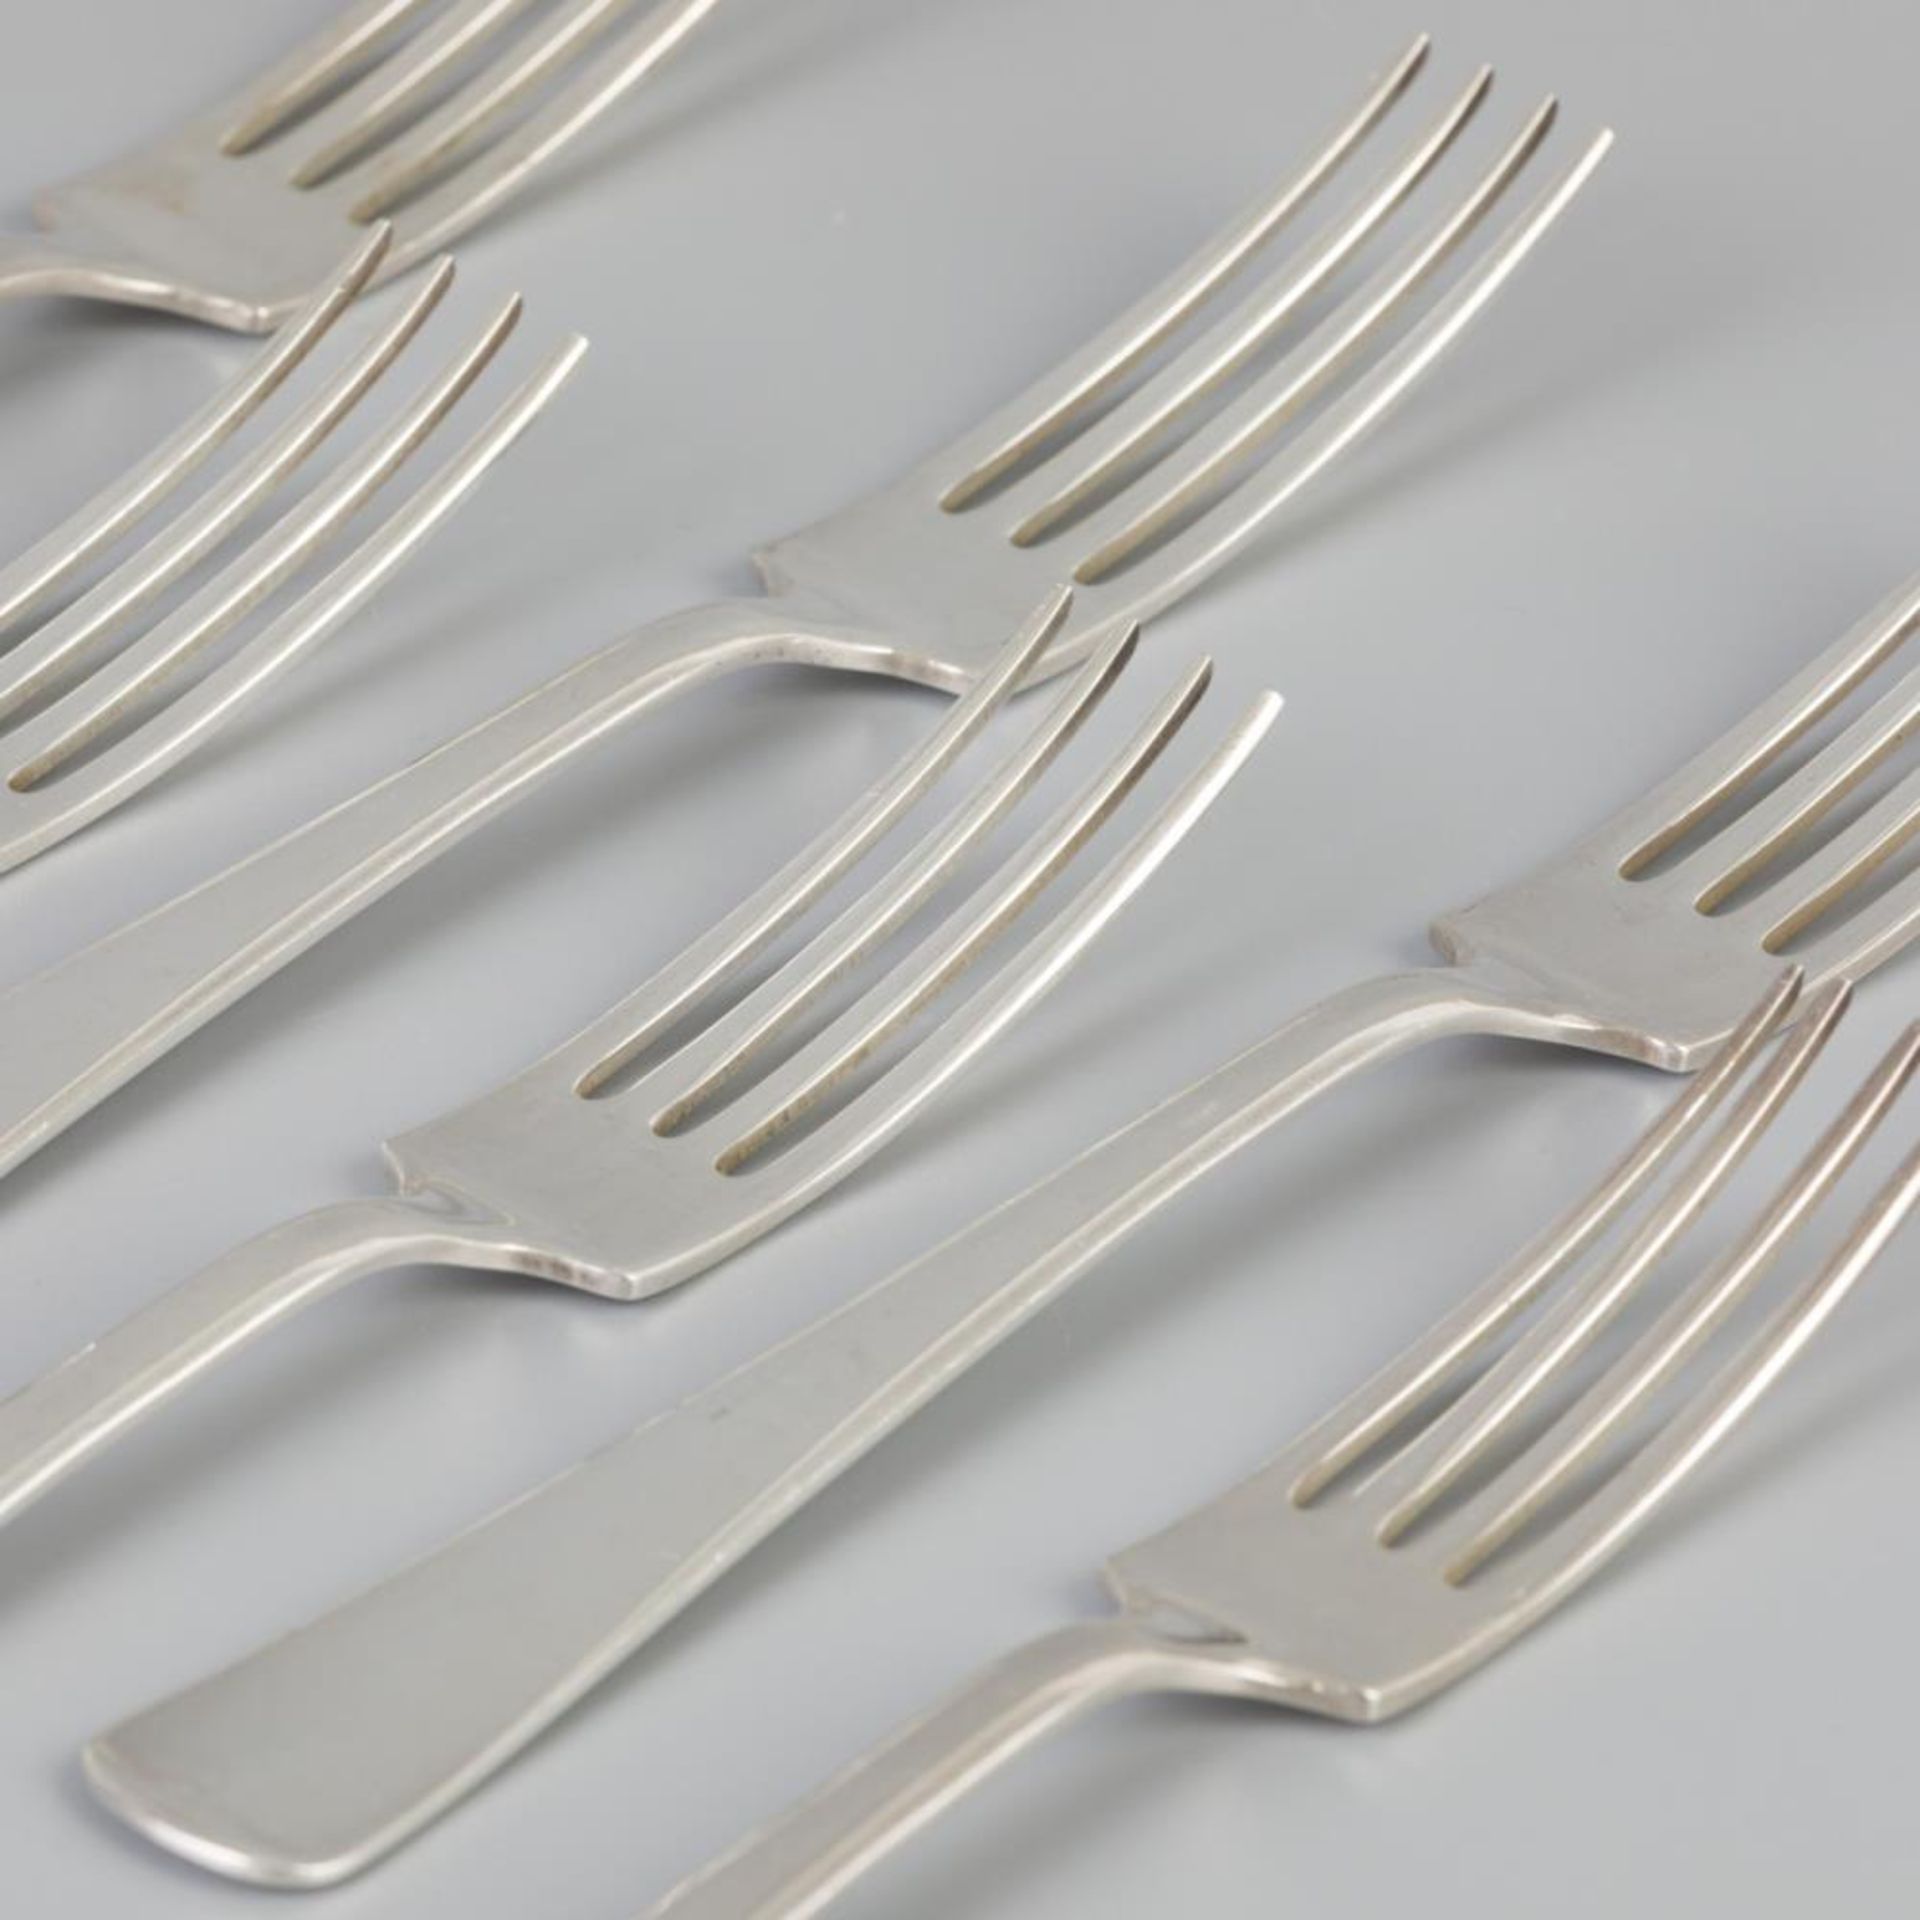 6 piece set of forks "Haags Lofje" silver. - Bild 2 aus 4